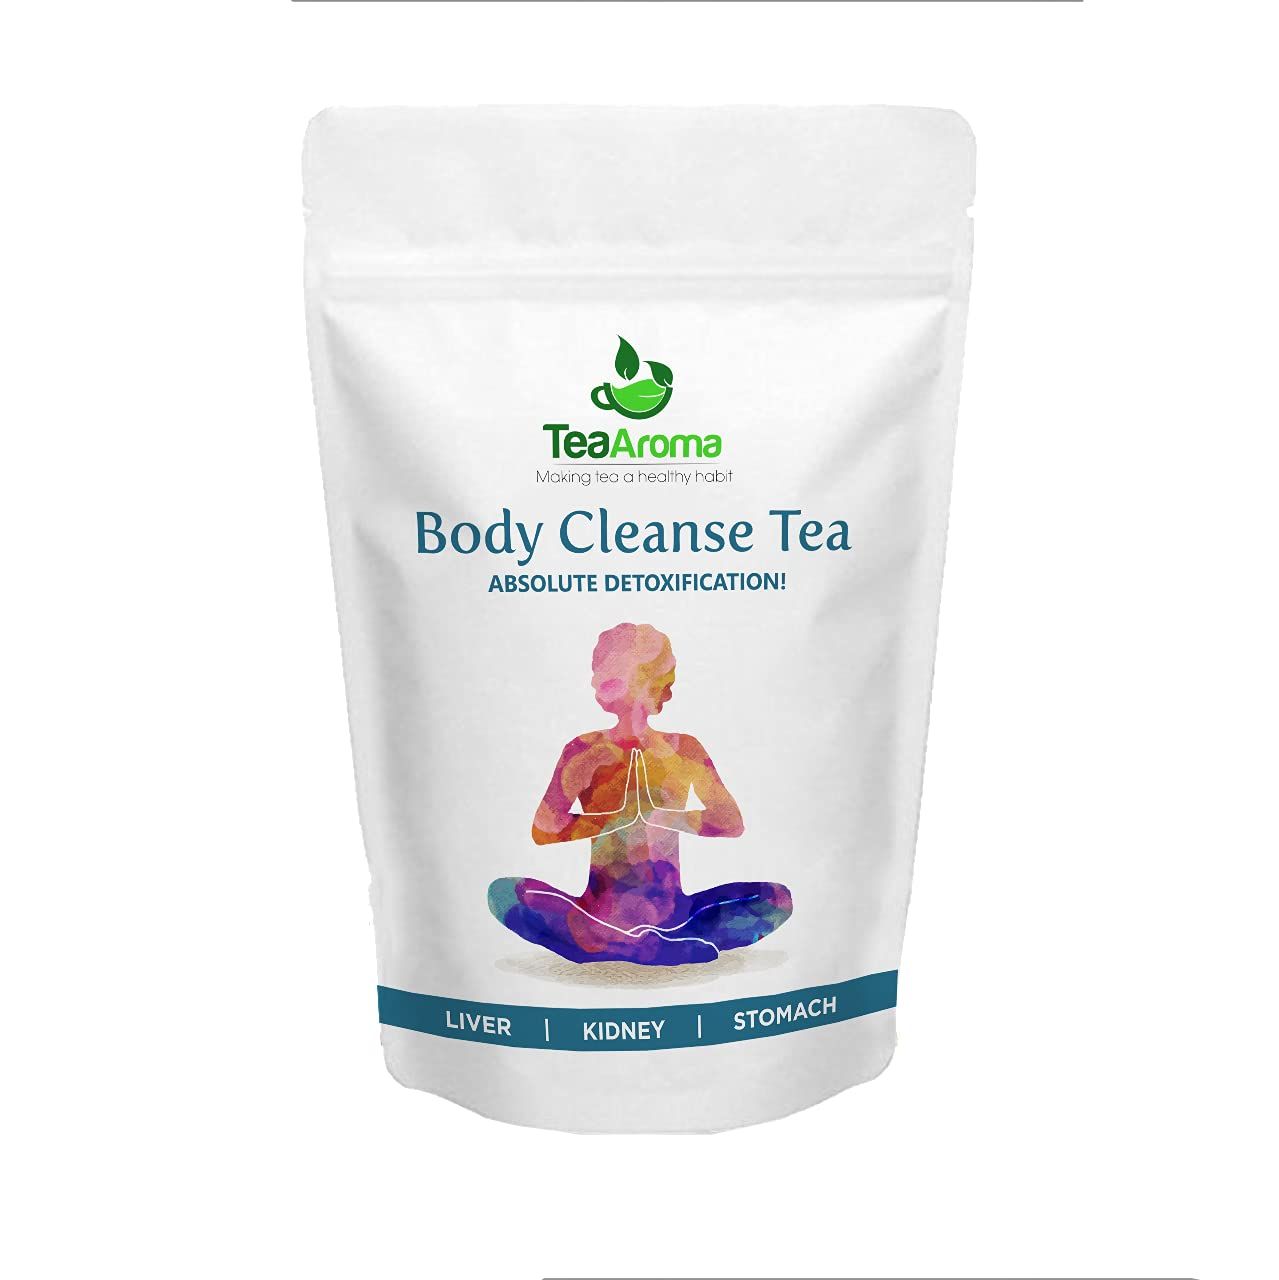 Tea Aroma Body Cleanse Tea Image